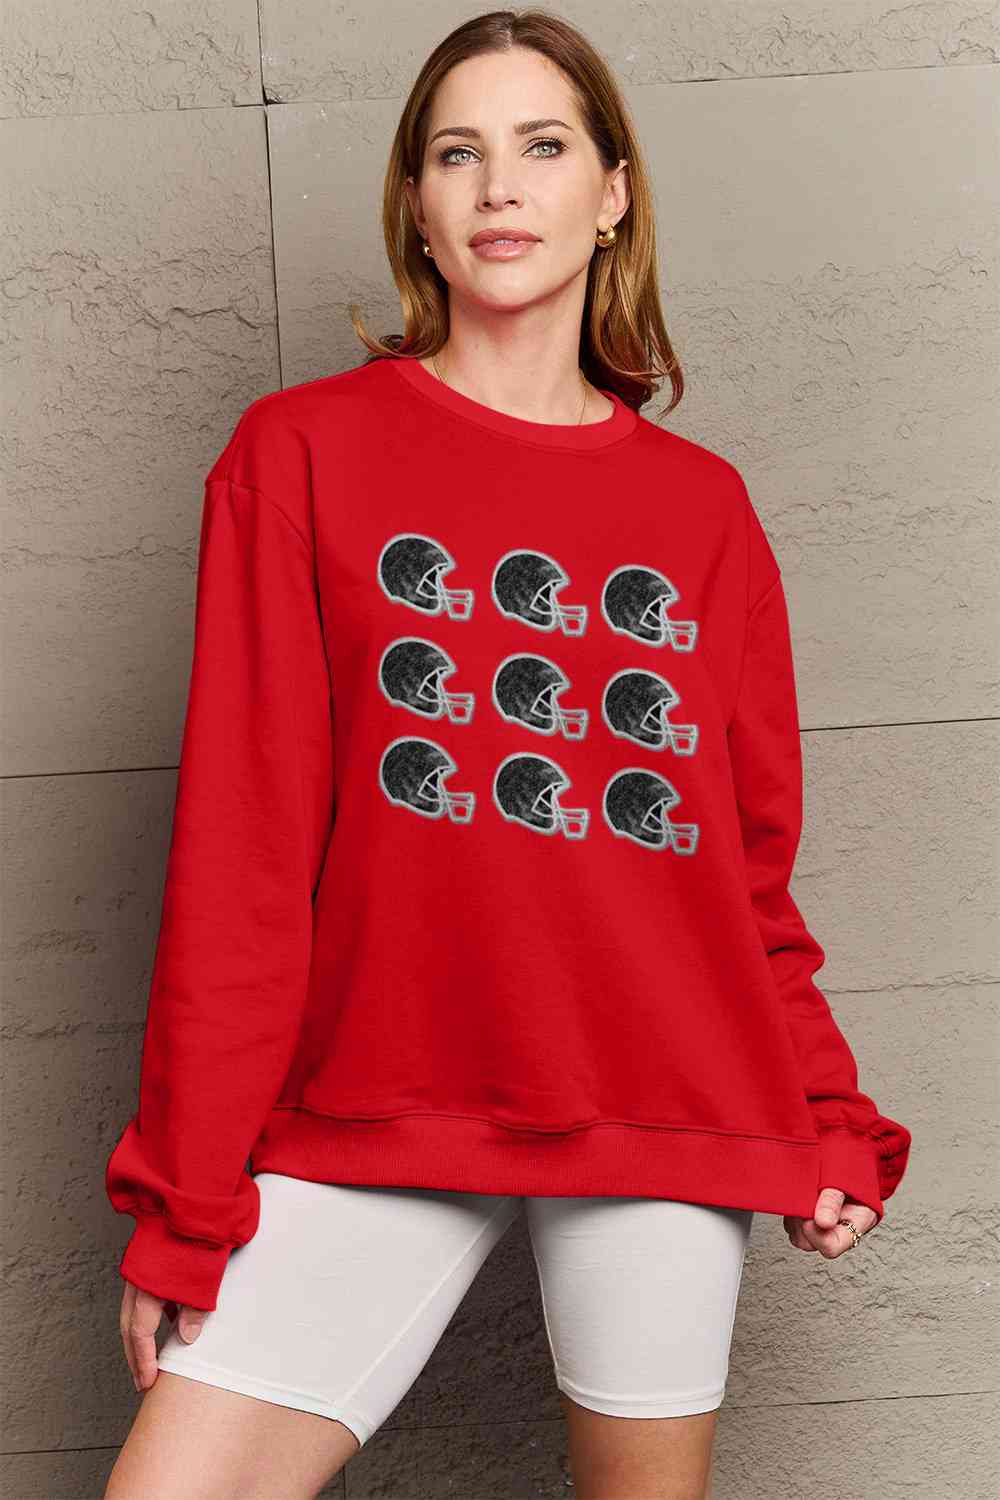 Simply Love Full Size Football Graphic Round Neck Sweatshirt